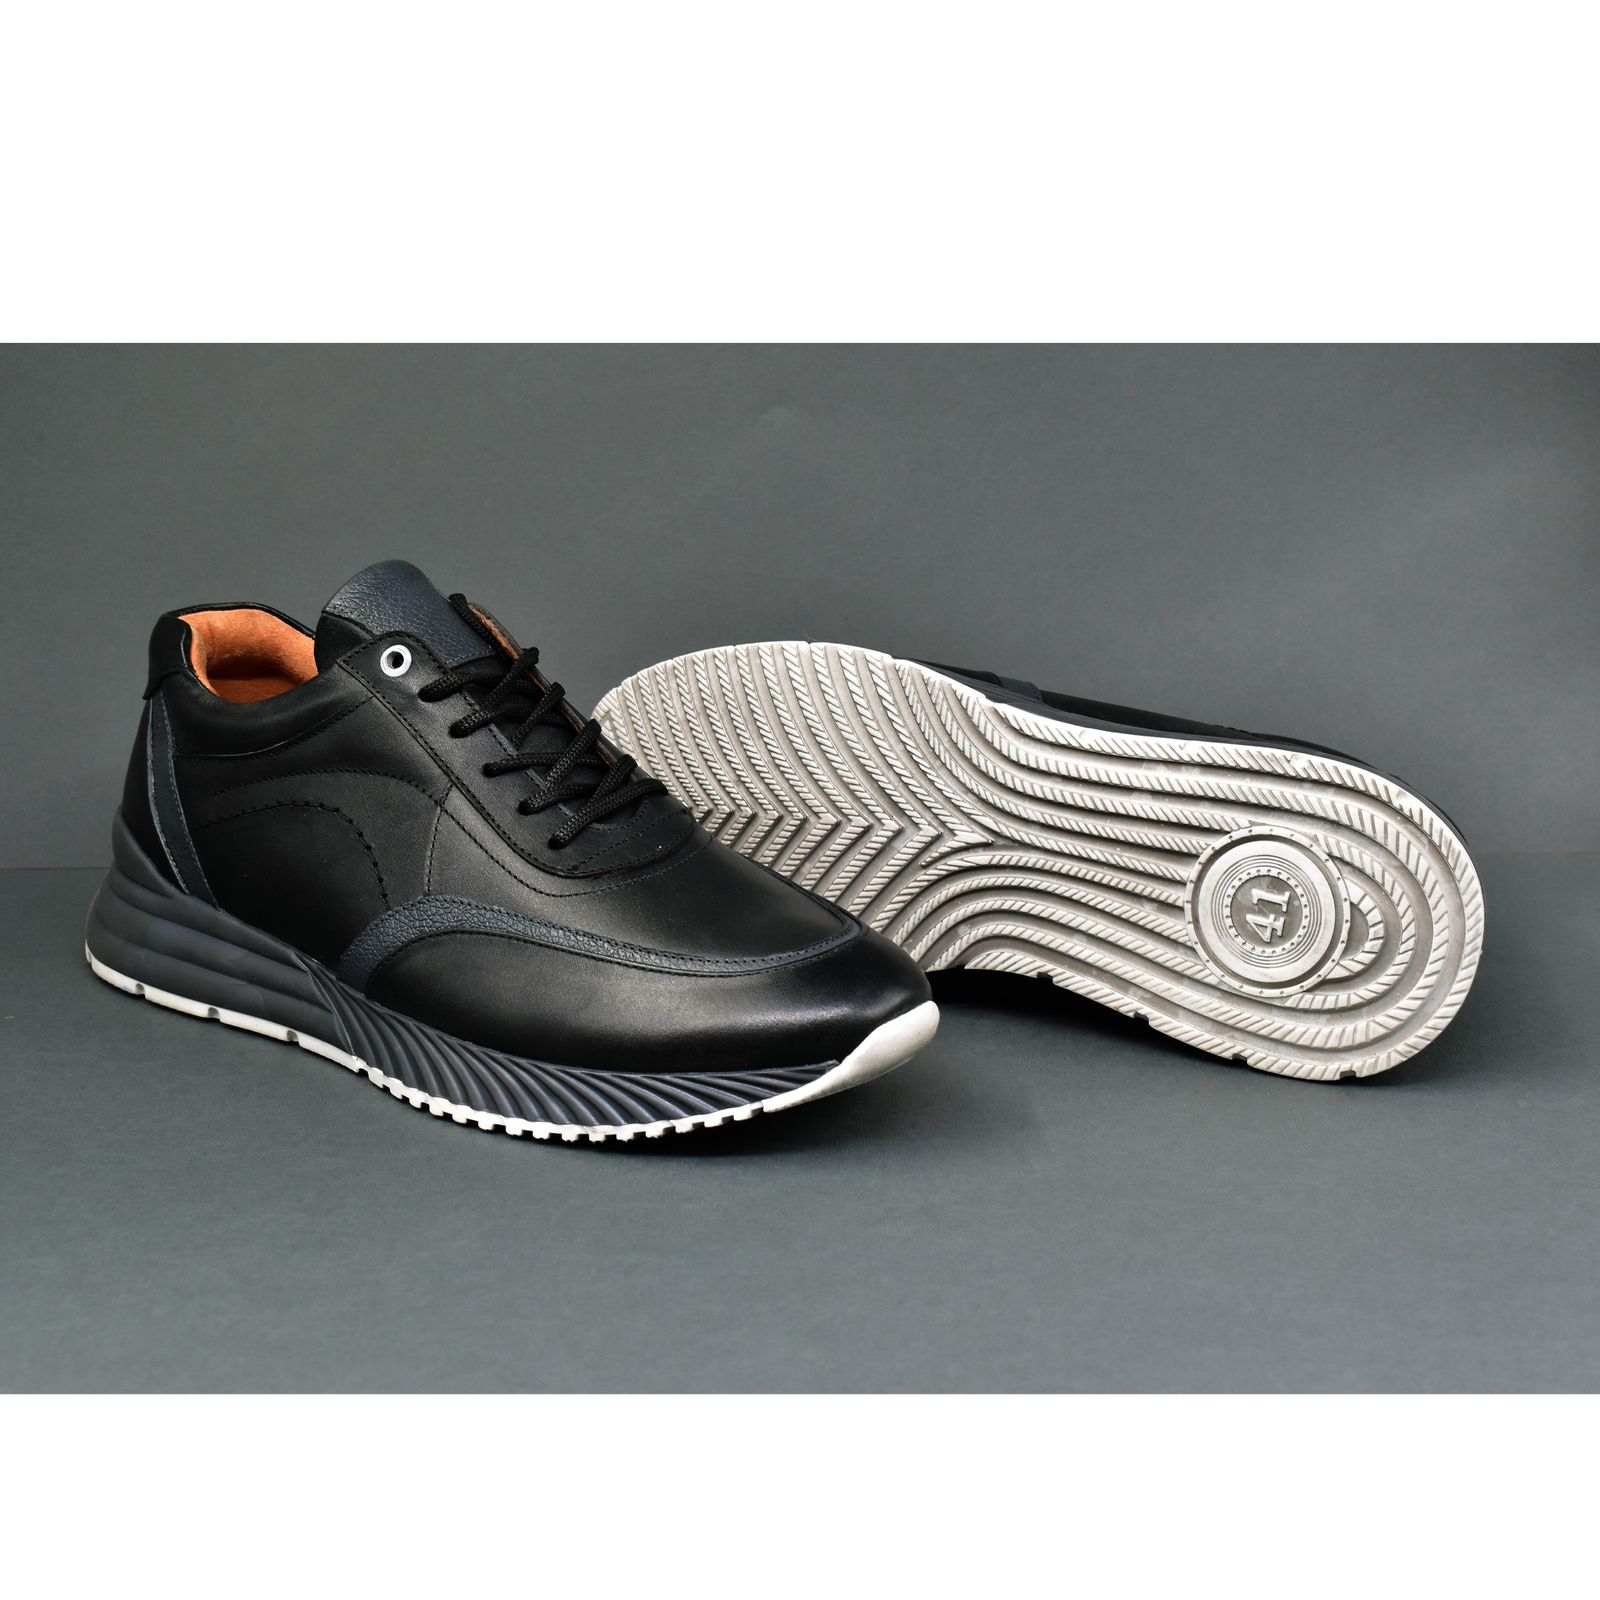 کفش روزمره مردانه پاما مدل ME-631 کد G1808 -  - 6